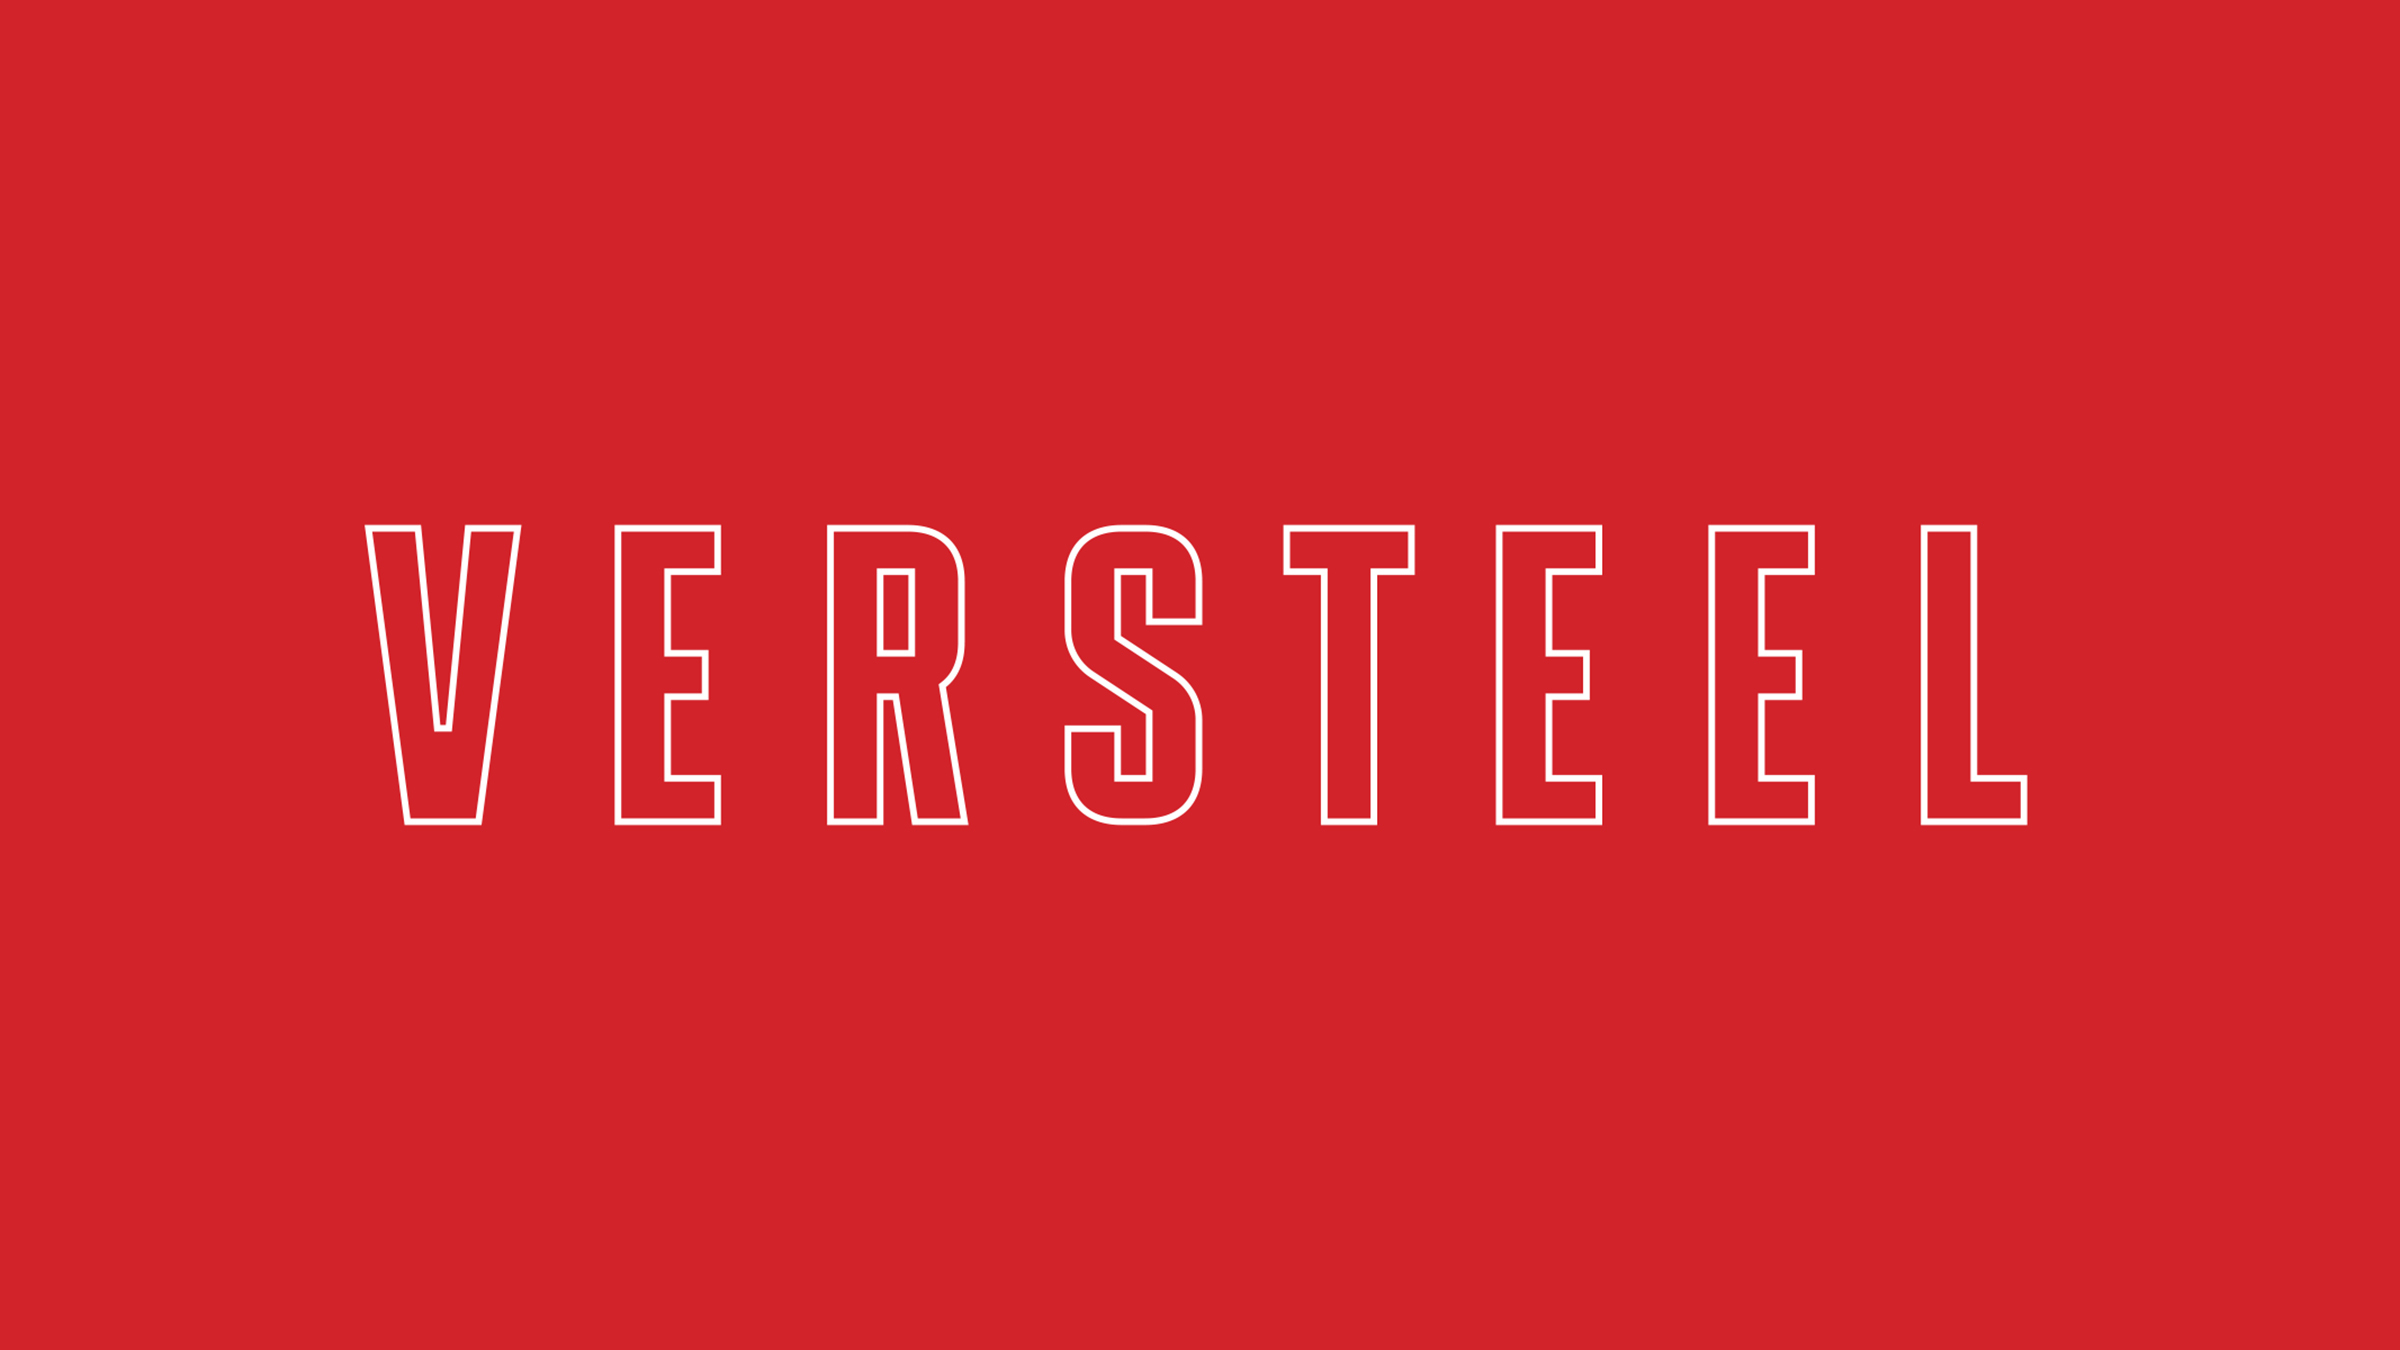 Versteel Design Typography Thirst Xtra 01